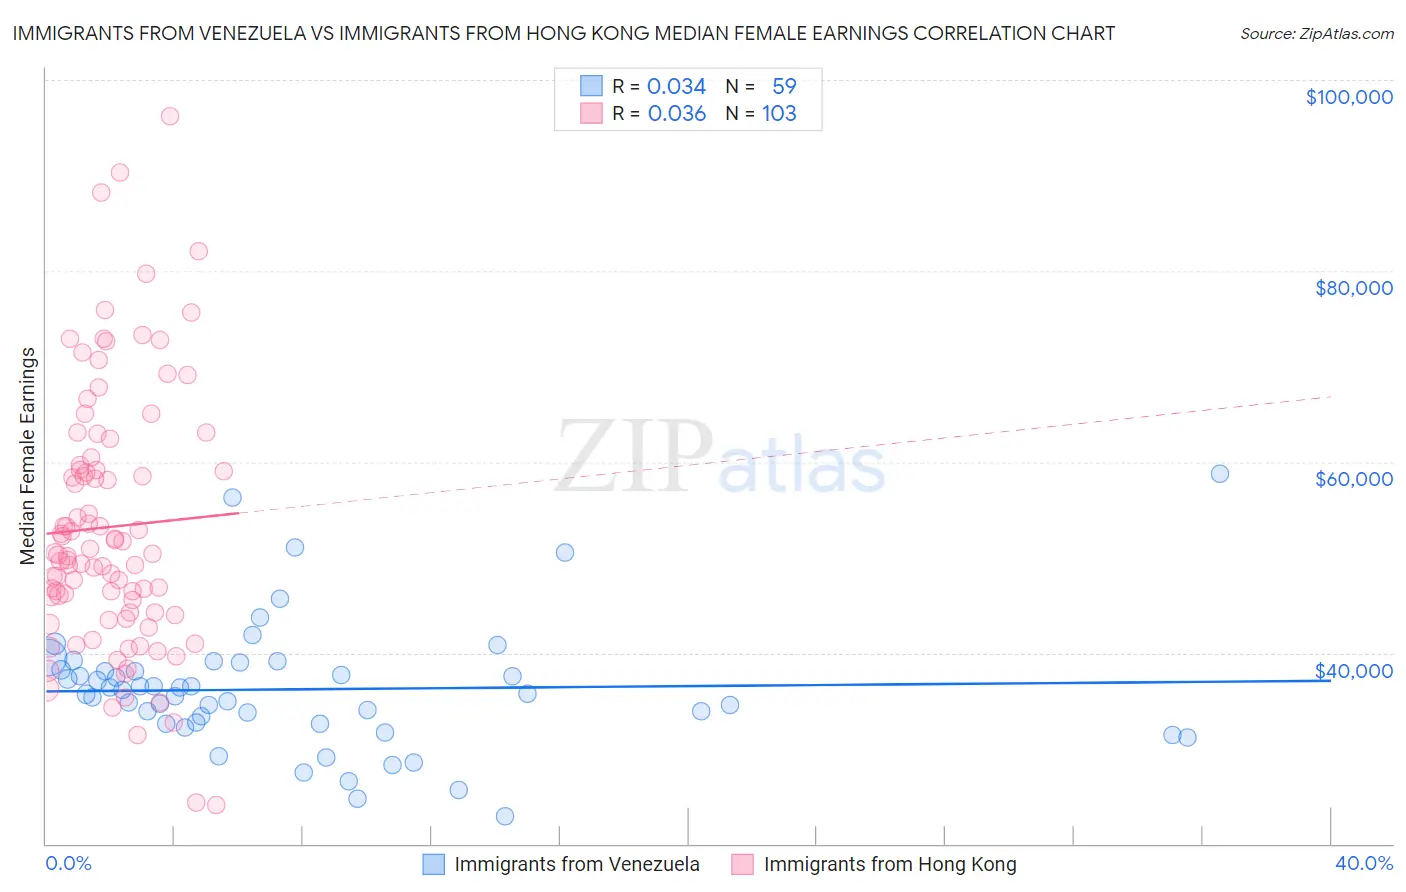 Immigrants from Venezuela vs Immigrants from Hong Kong Median Female Earnings